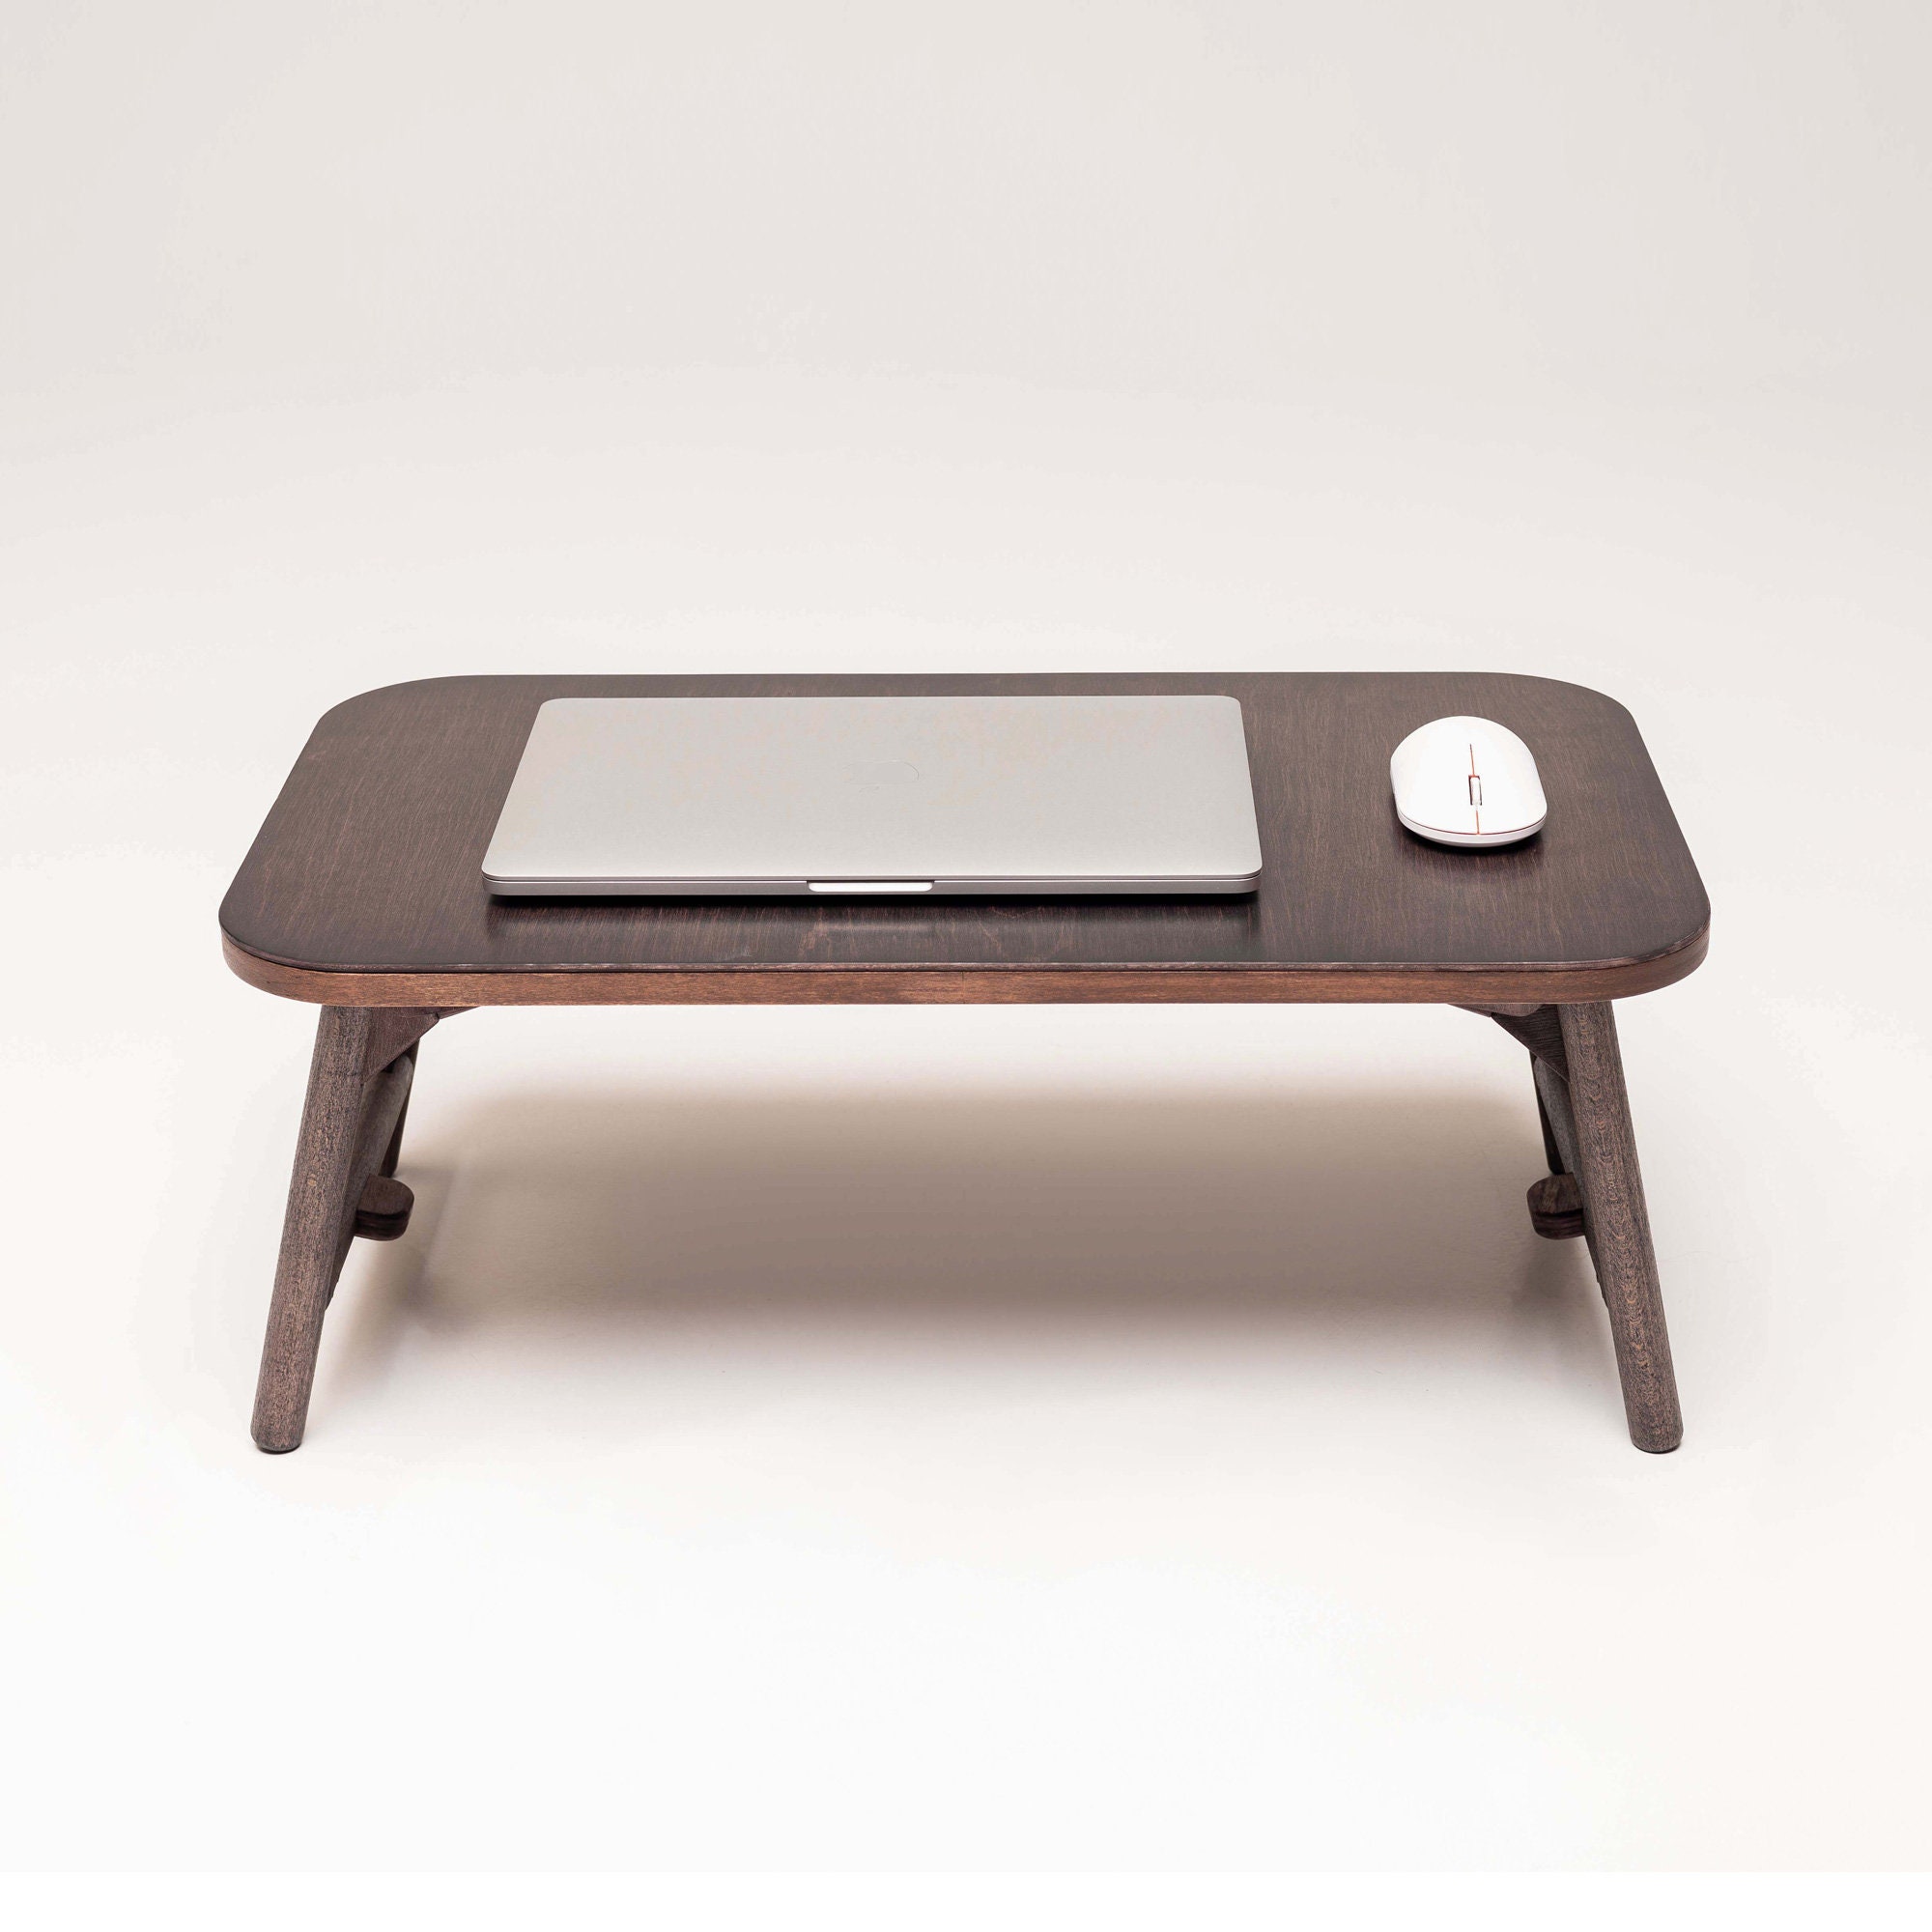 Reclaimed Wood Lap Desk / Laptop Tray / Lap Board / Rustic Sofa